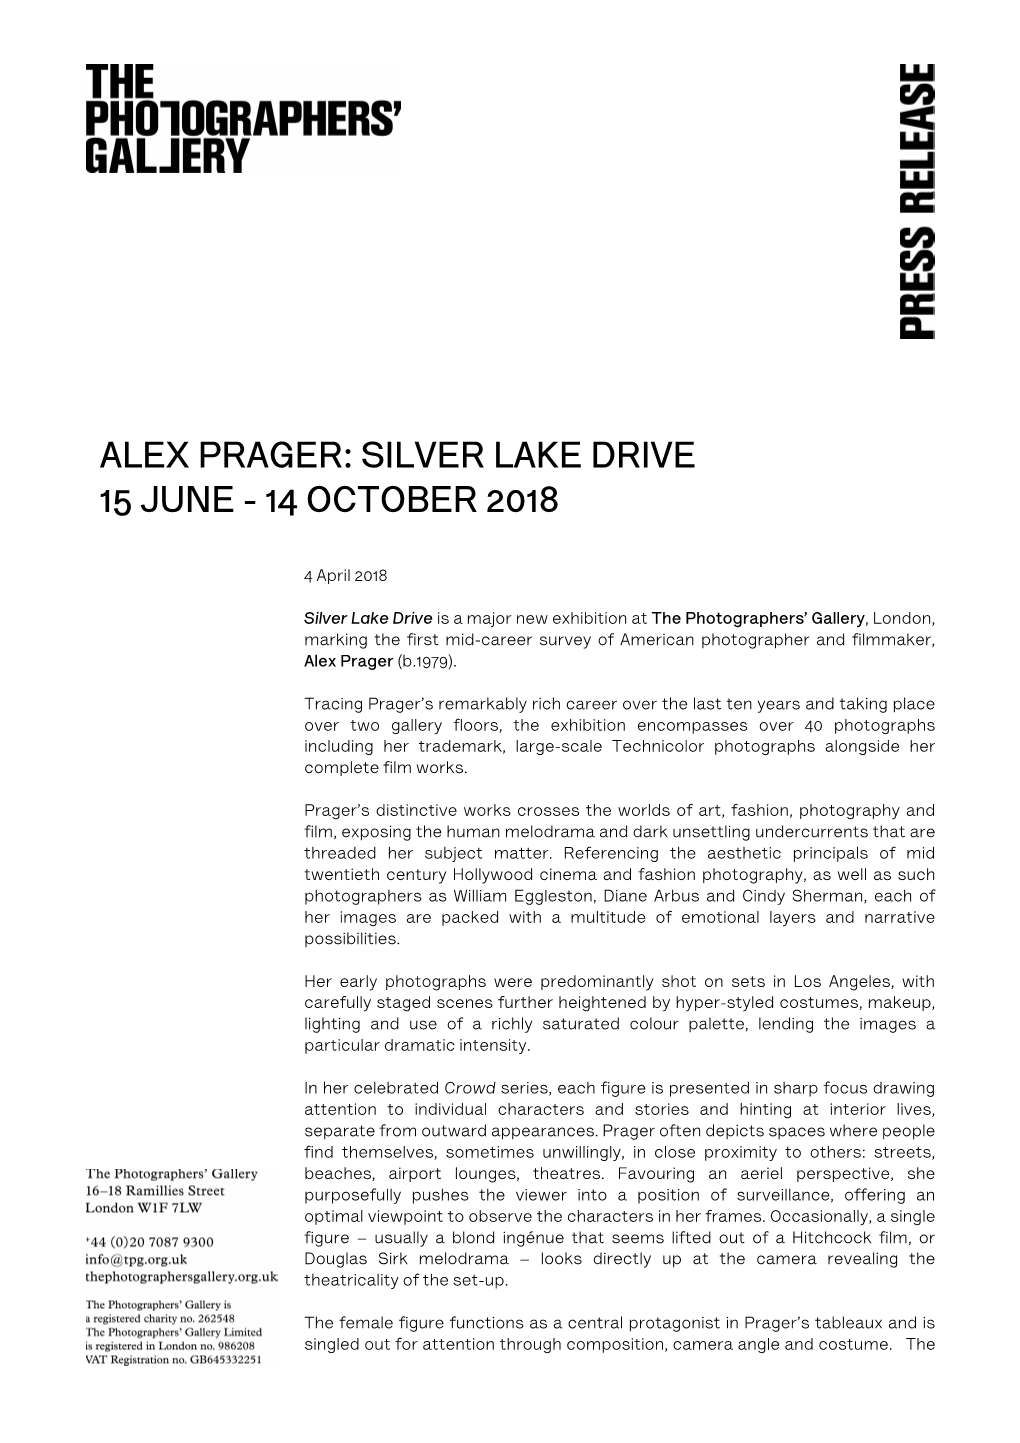 Alex Prager: Silver Lake Drive 15 June - 14 October 2018